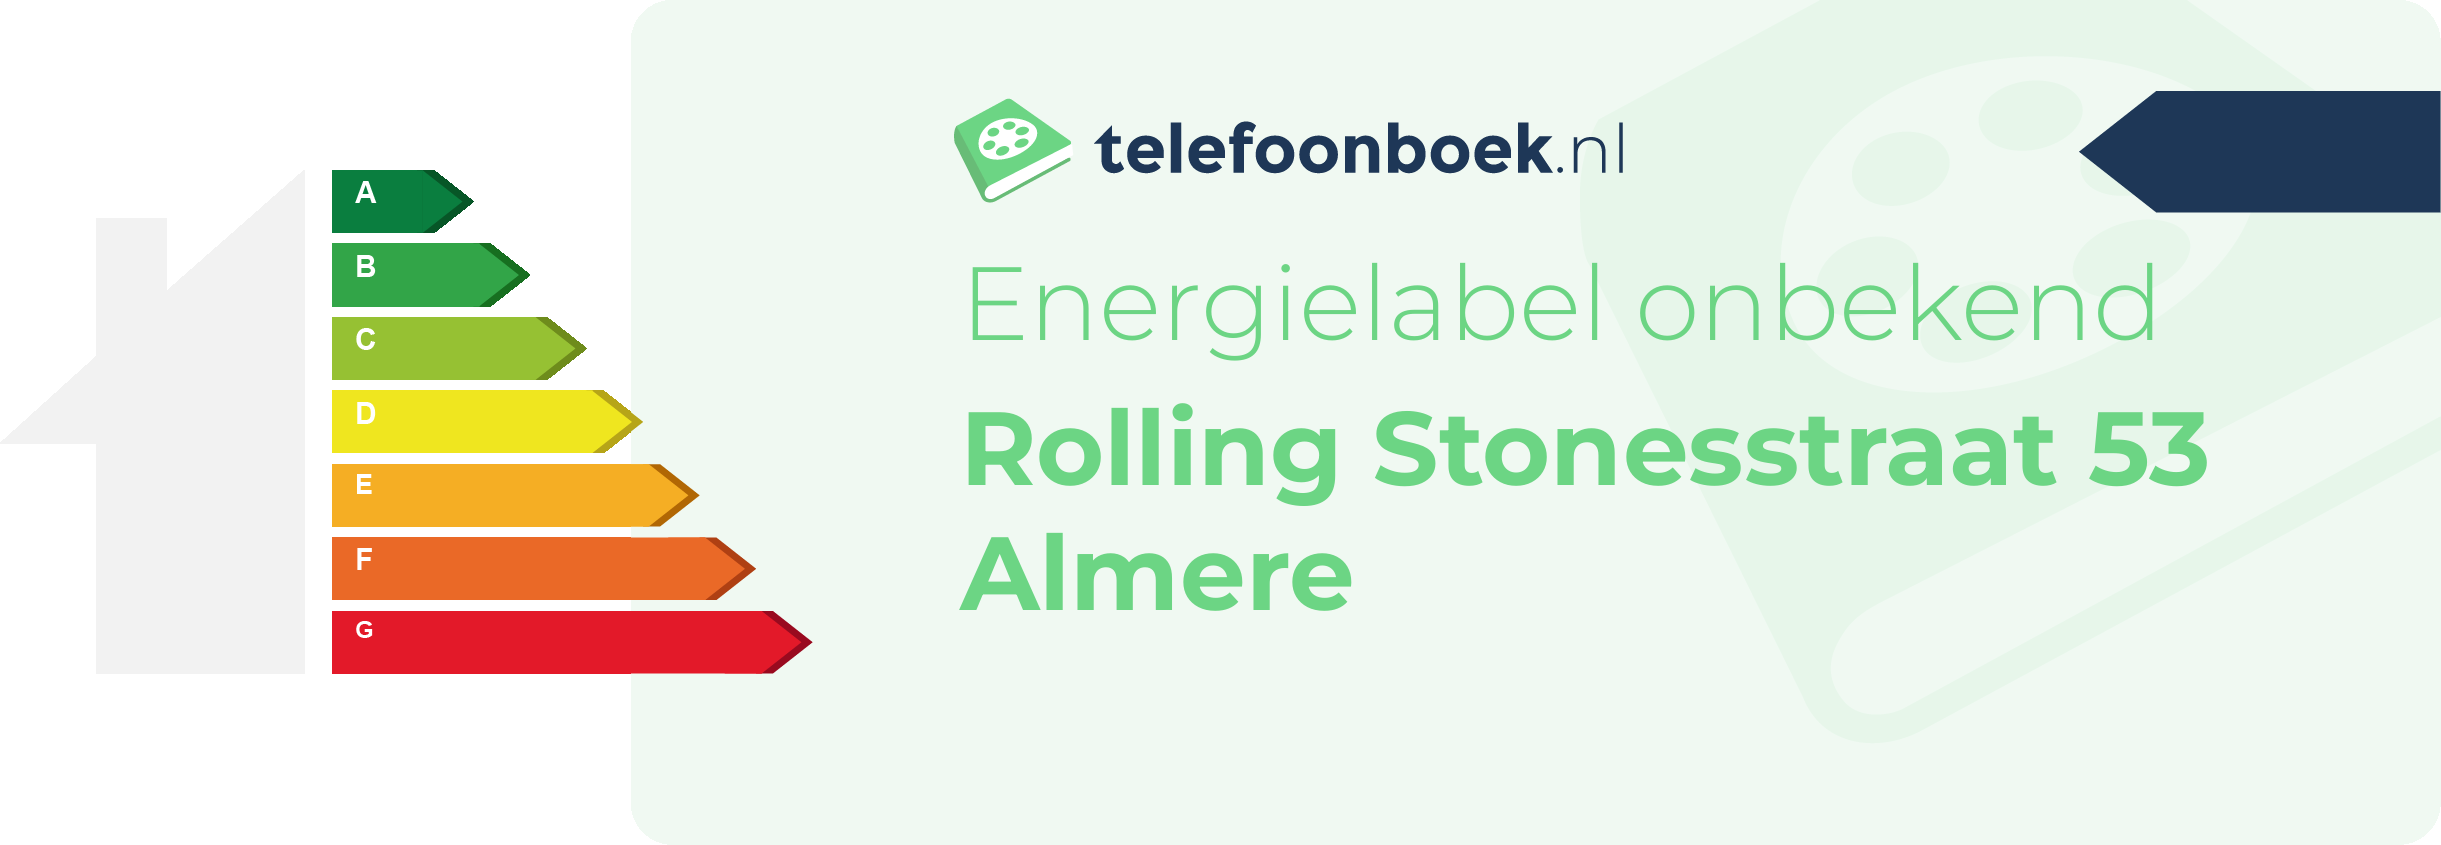 Energielabel Rolling Stonesstraat 53 Almere